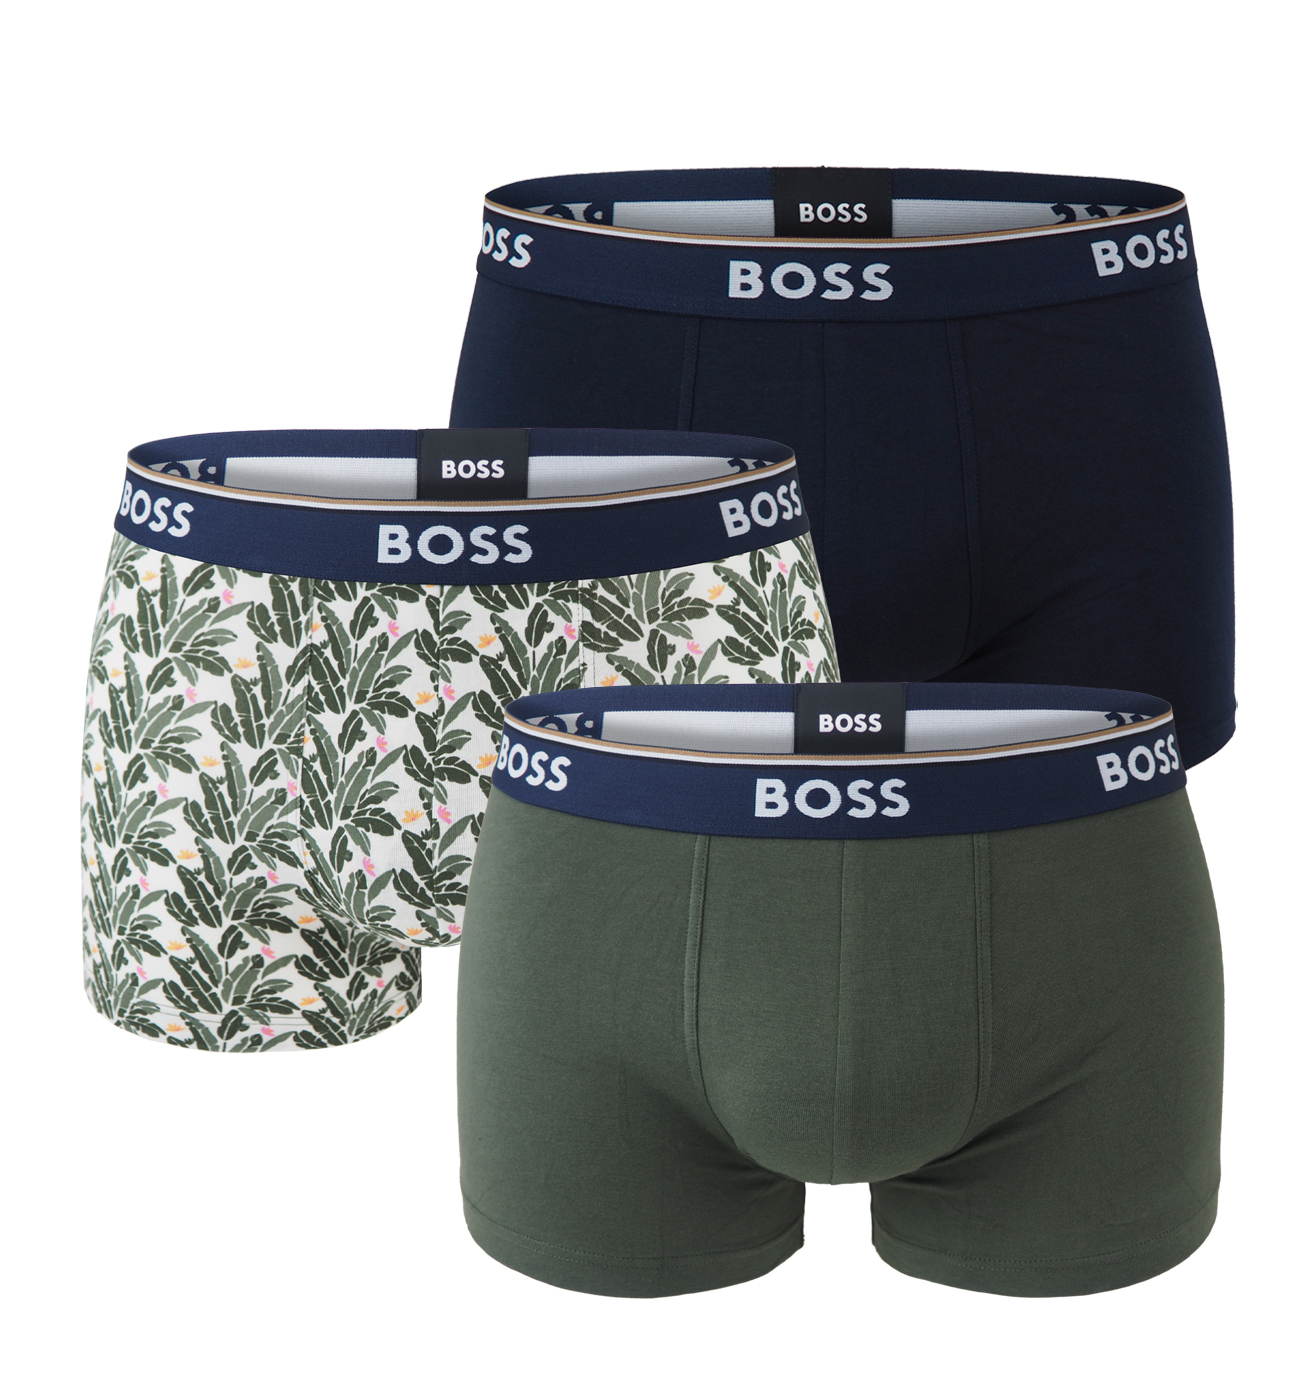 BOSS - boxerky 3PACK cotton stretch army green & spring color combo - limitovaná fashion edícia (HUGO BOSS)